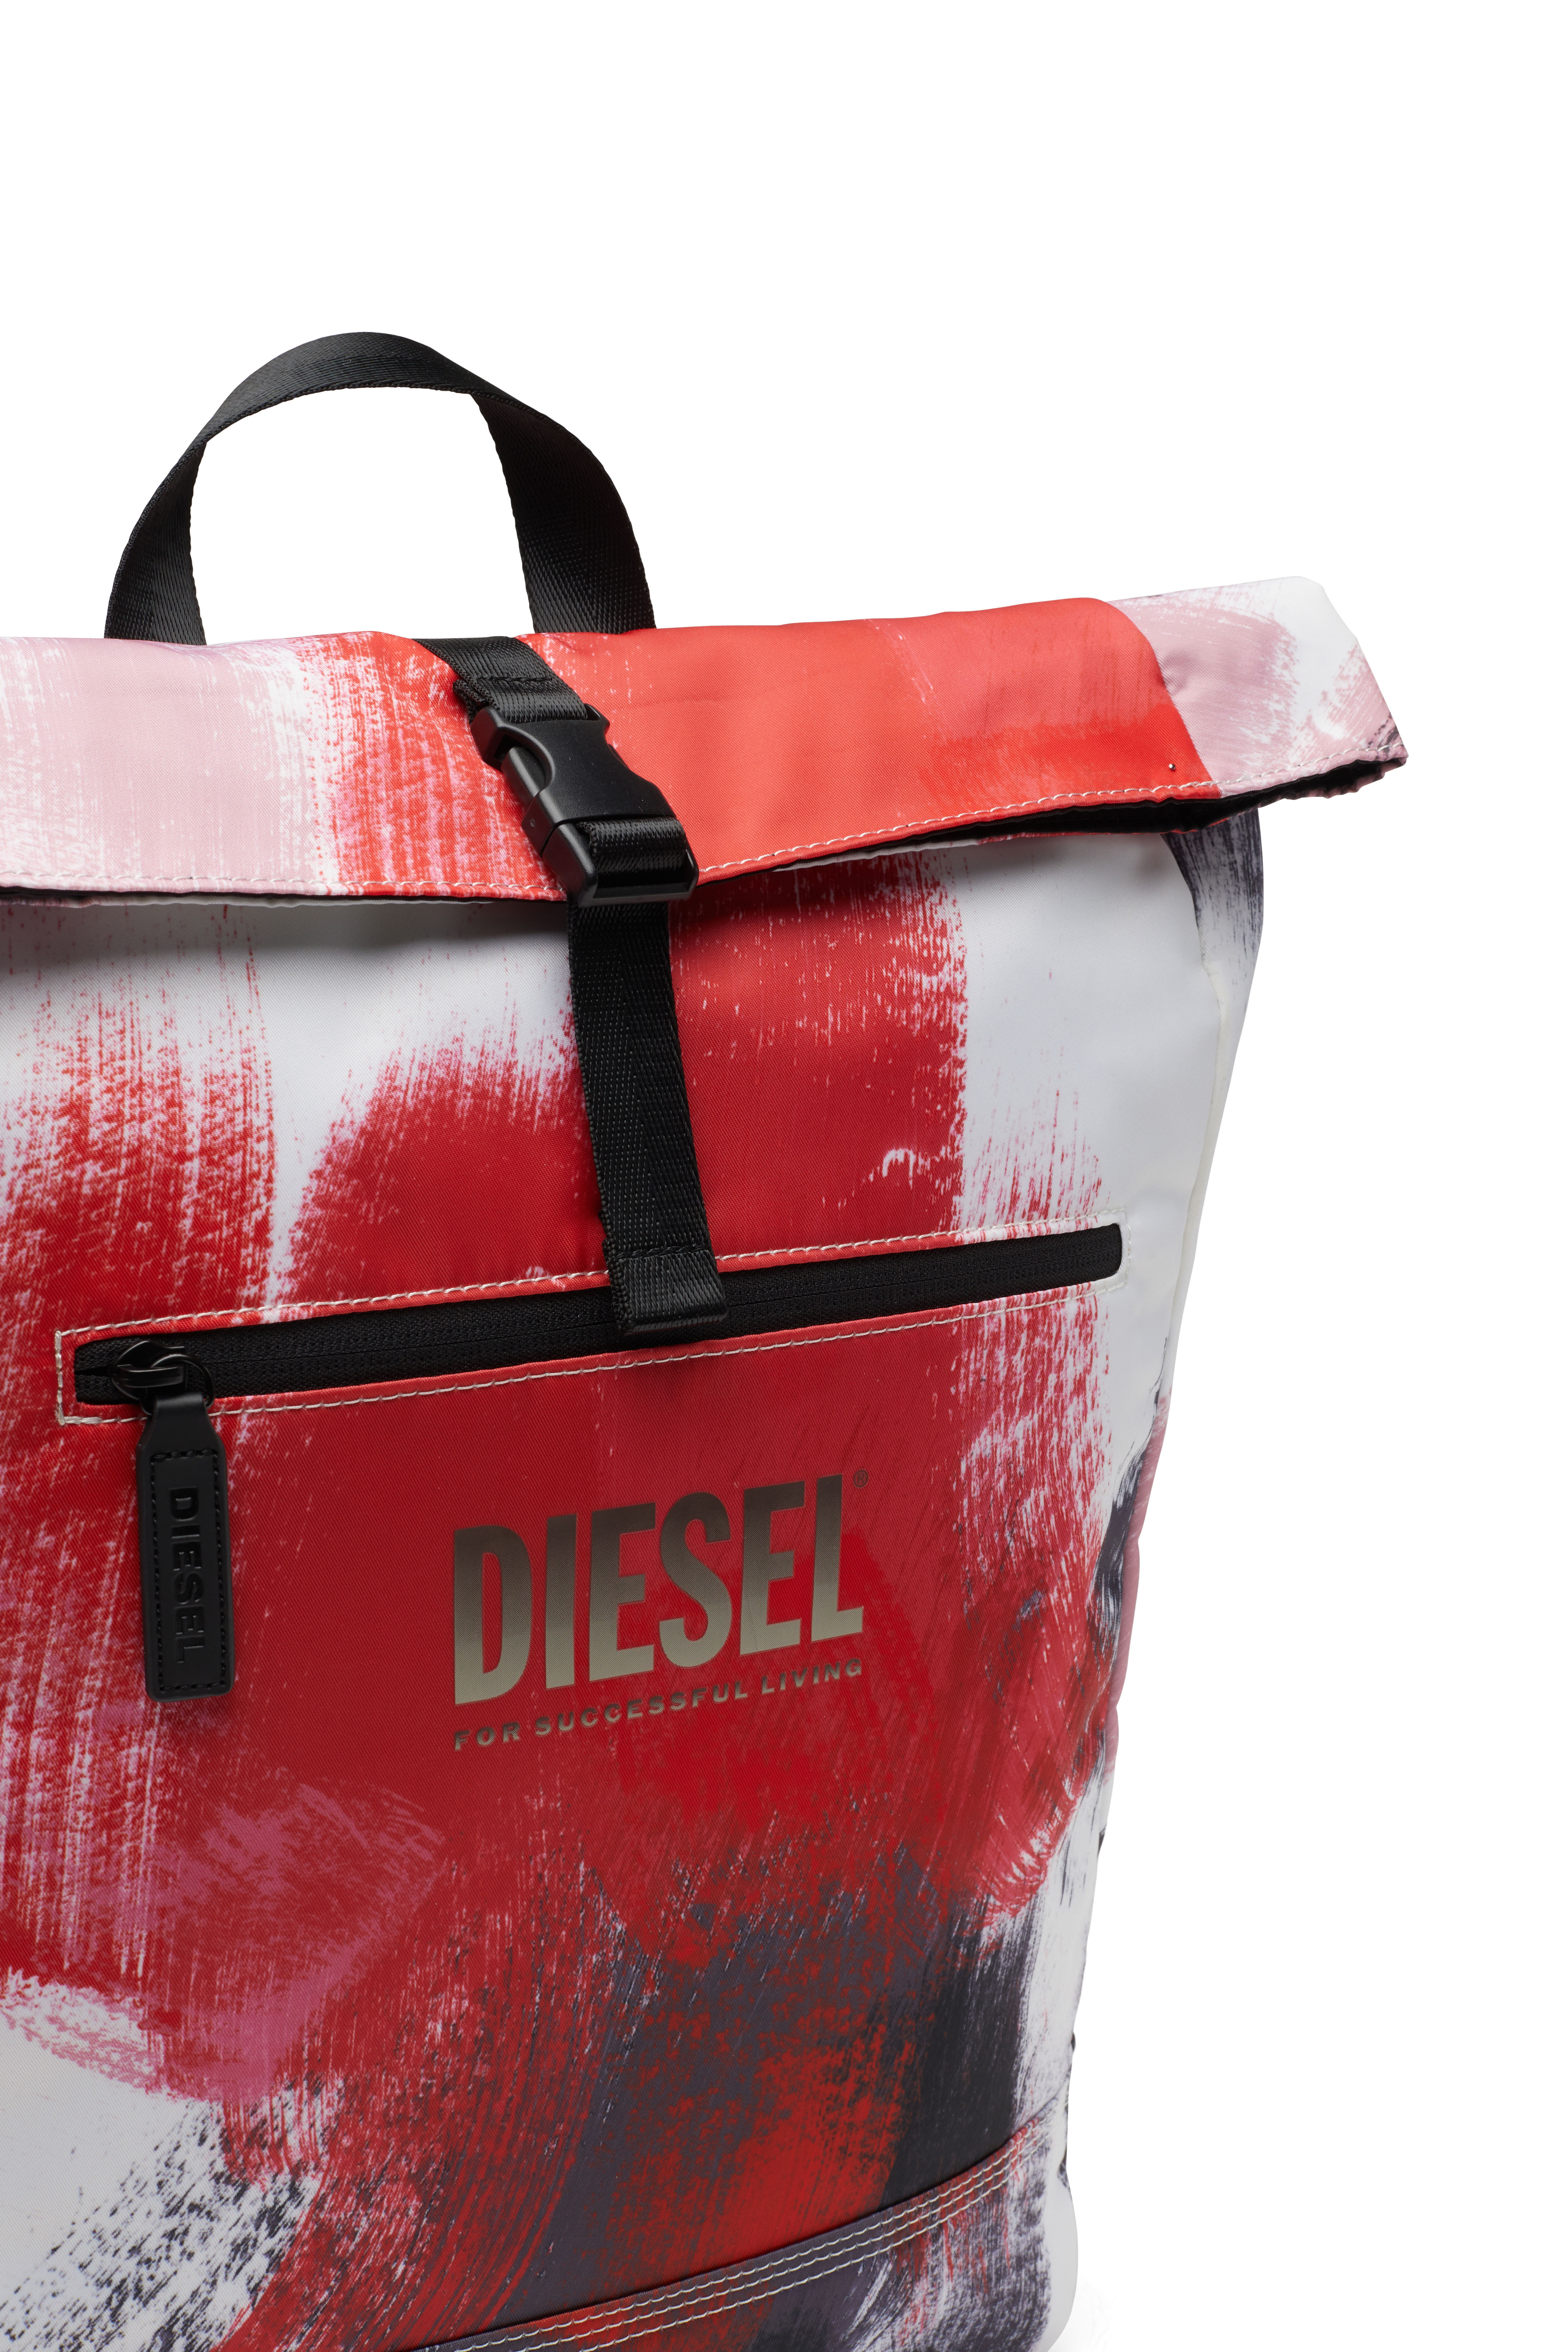 Diesel - NINJABACK PRINT, Red/White - Image 5